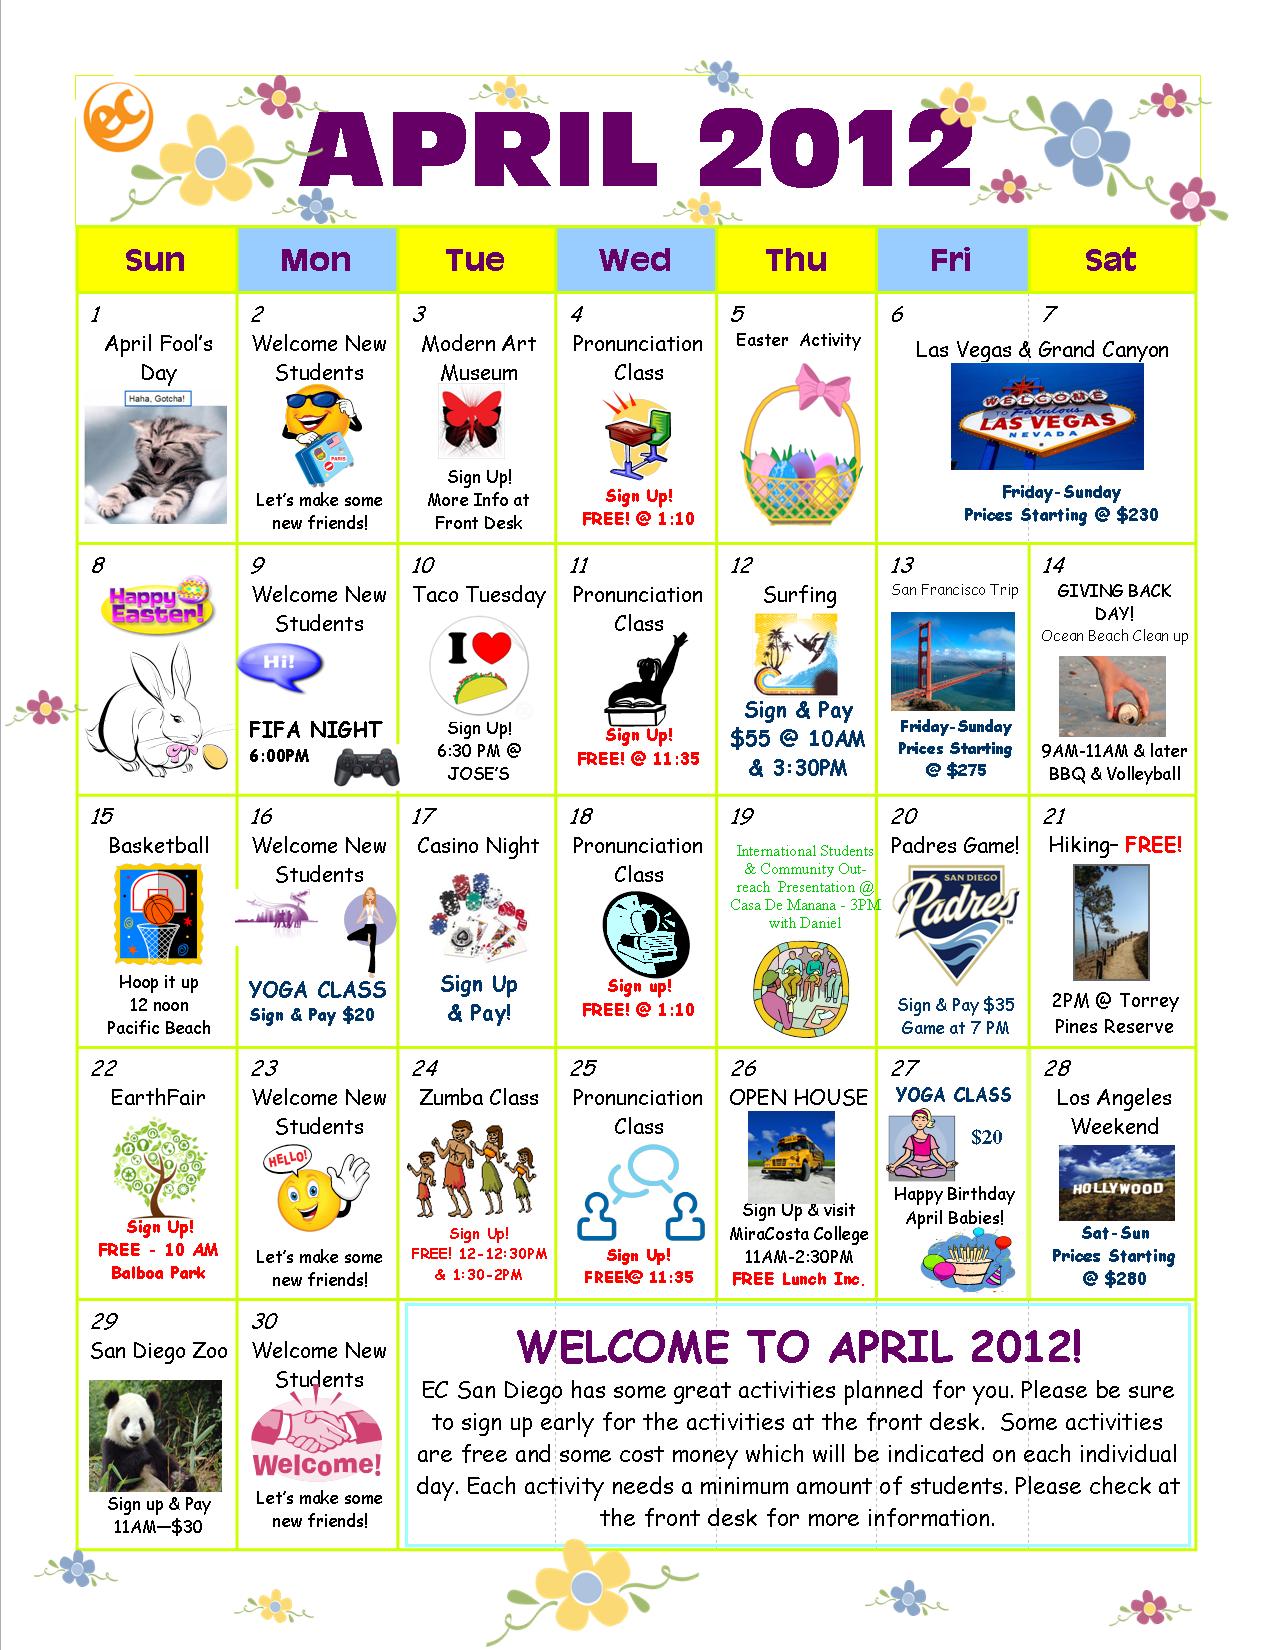 April Activity Calendar is here! EC San Diego Blog